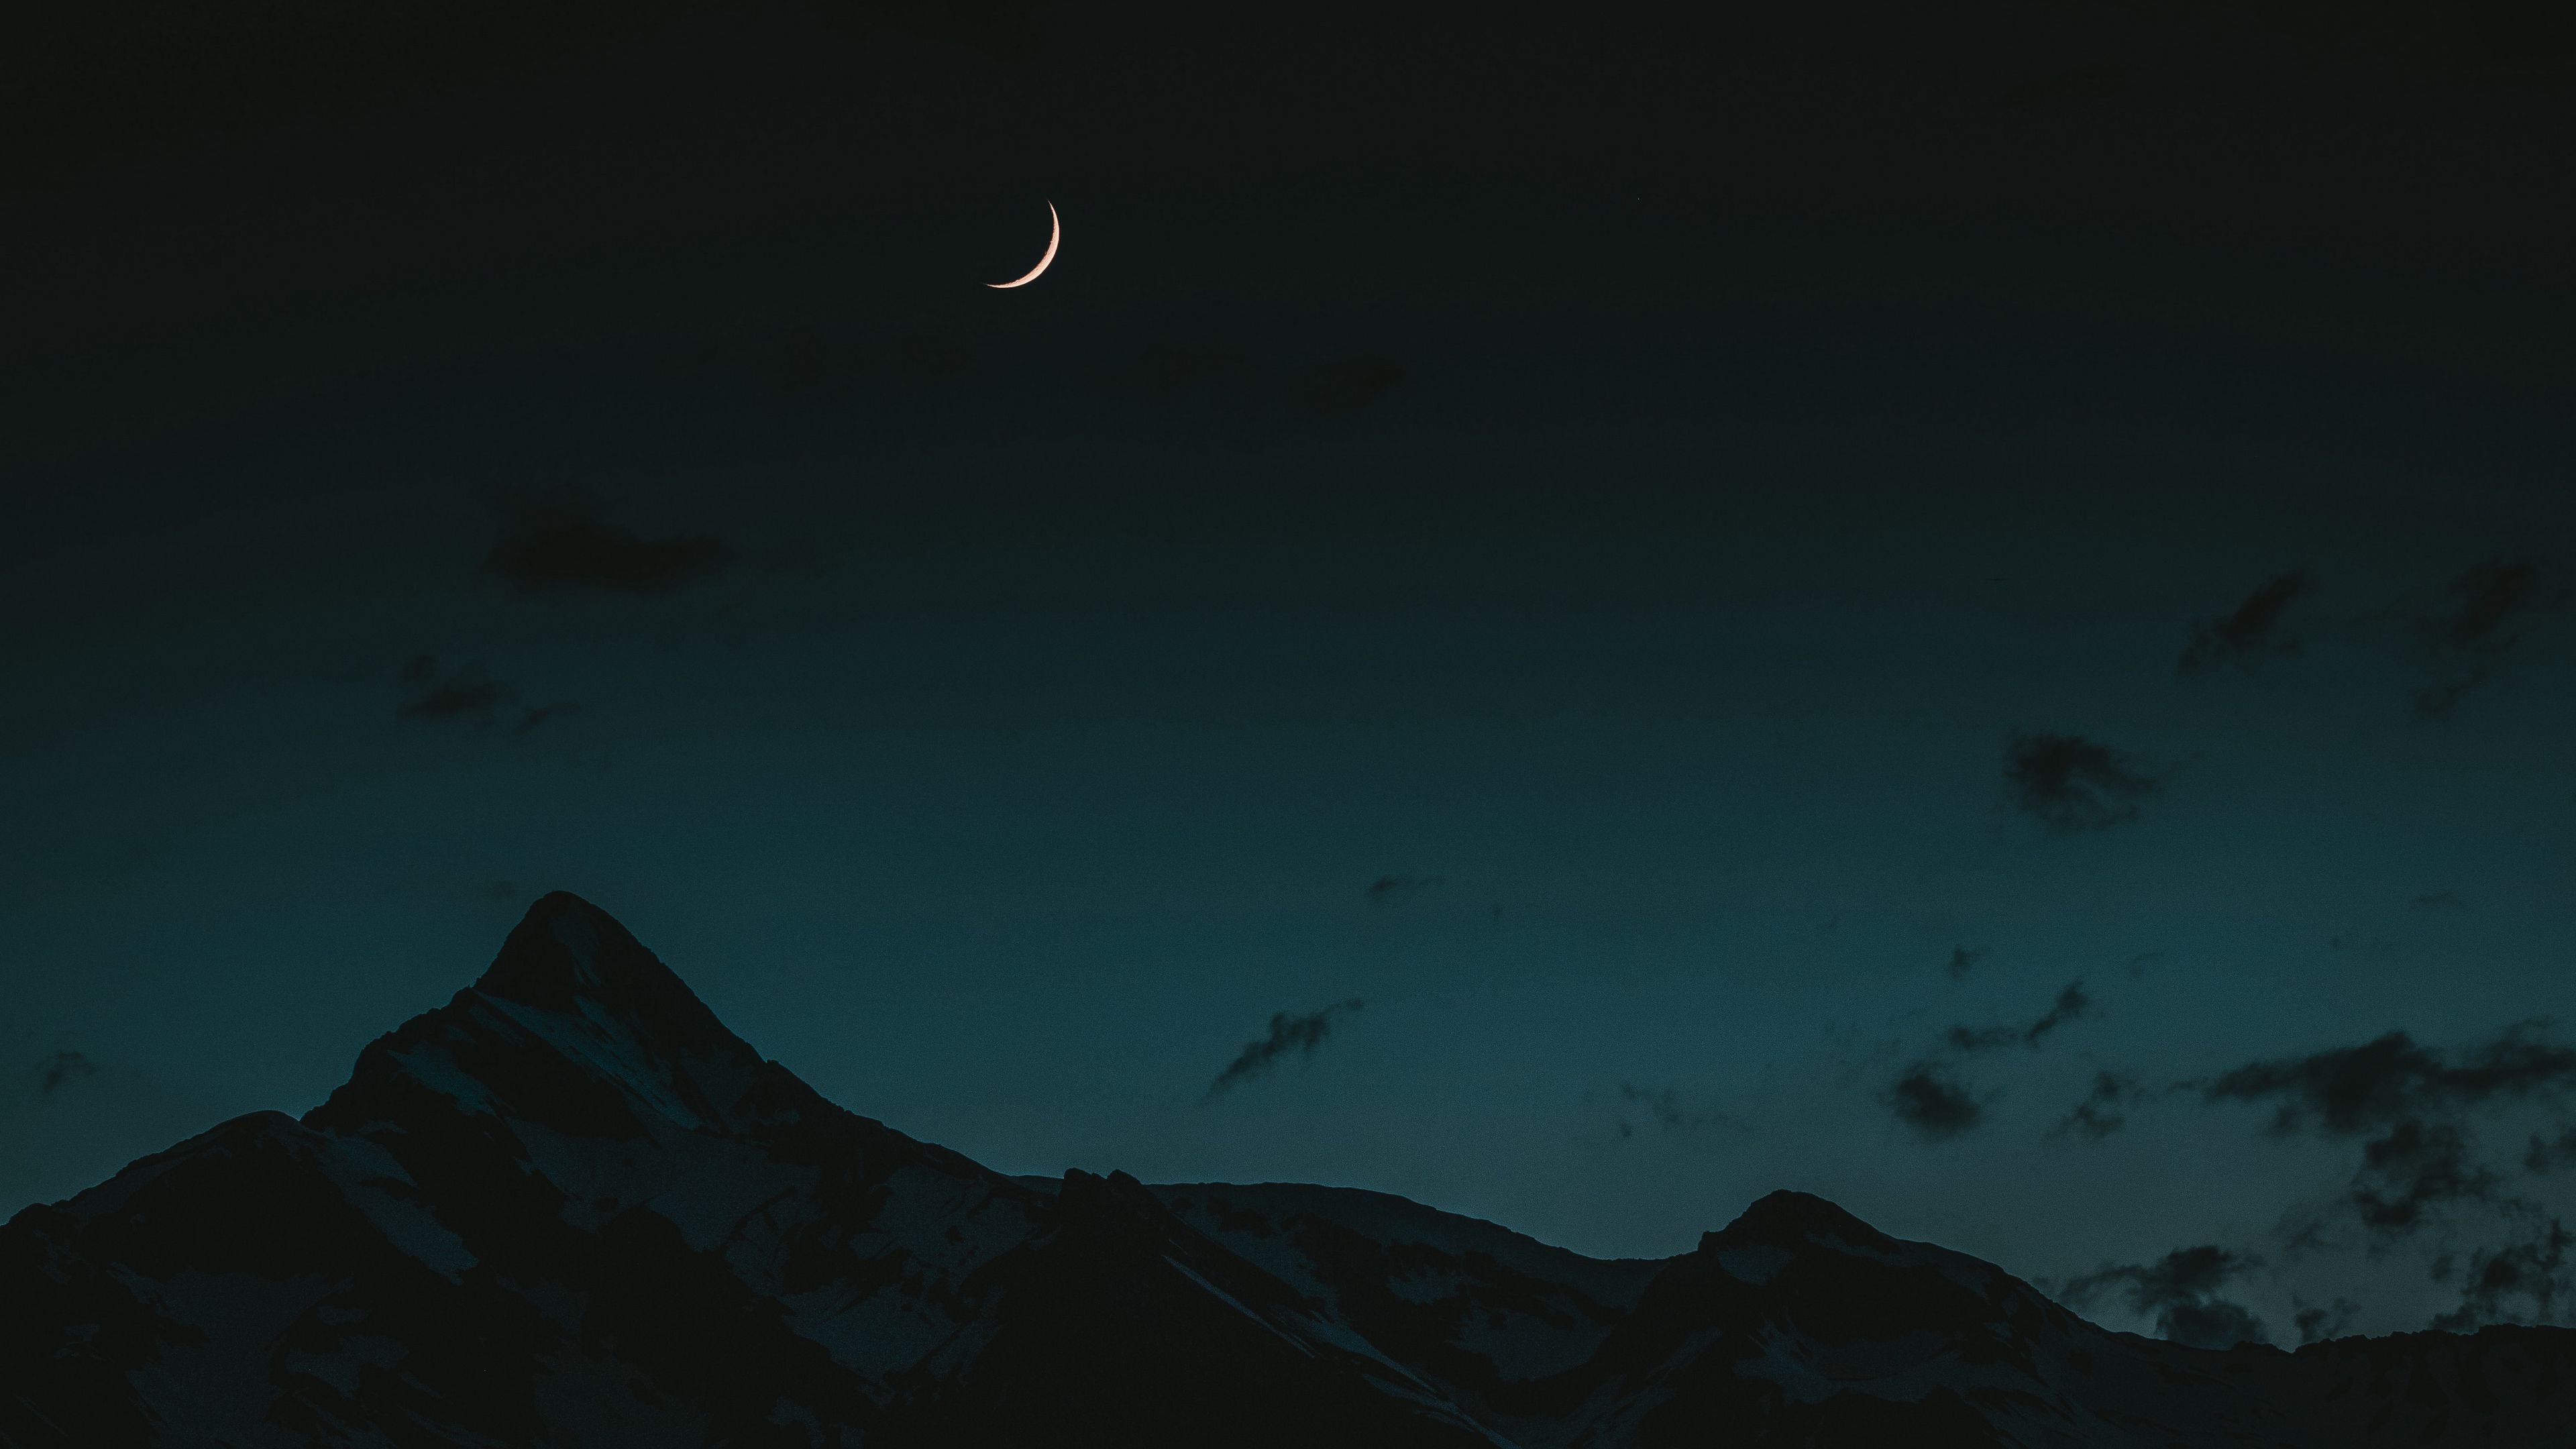 Download wallpaper 3840x2160 moon, mountains, night, sky 4k uhd 16:9 hd  background